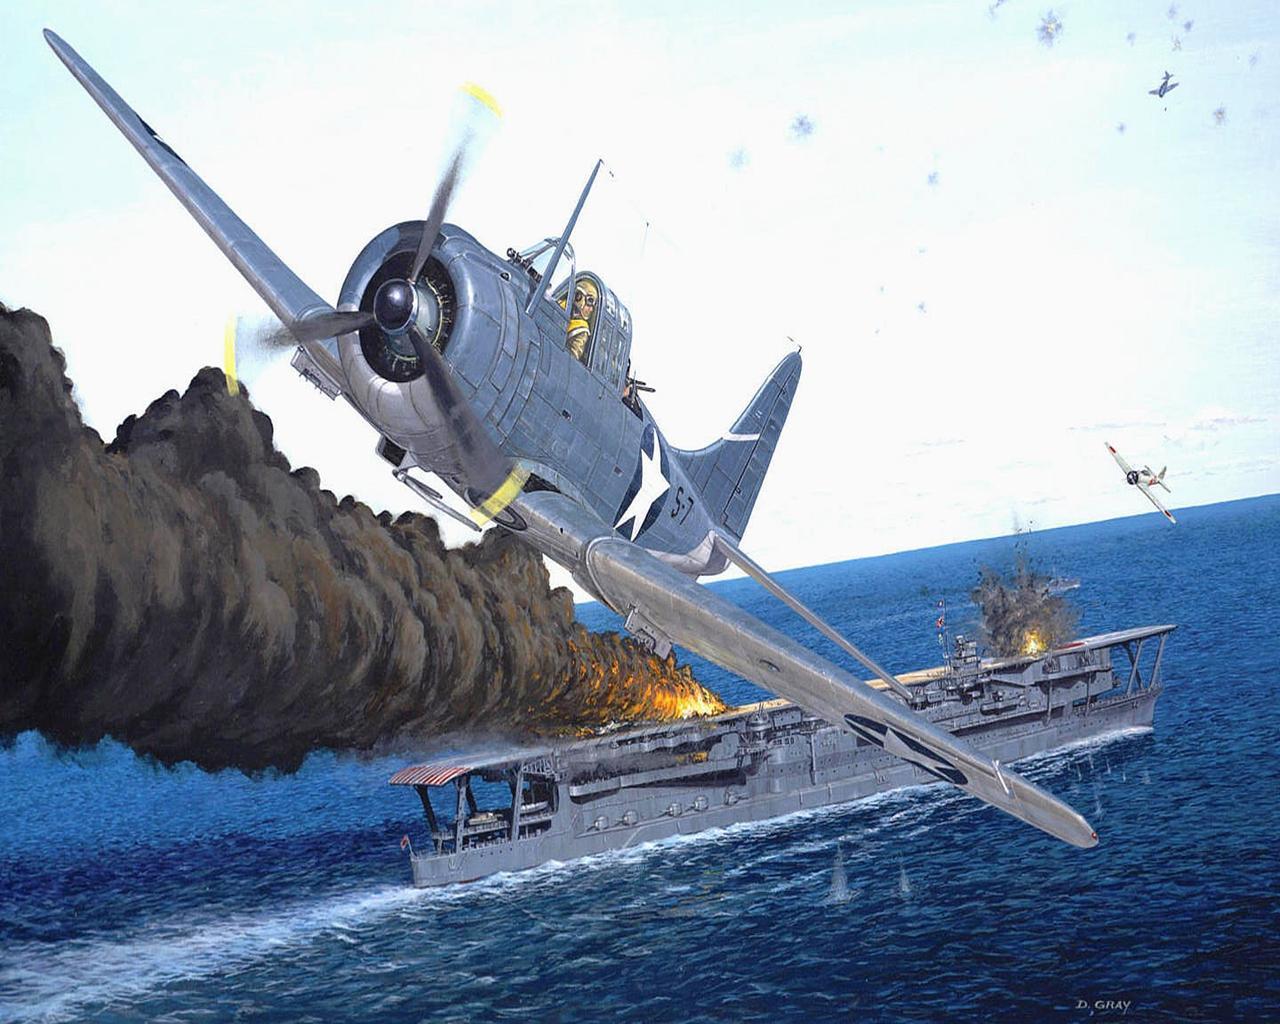 Photos Airplane Battle of Midwey/ IJN Kaga Painting Art Aviation